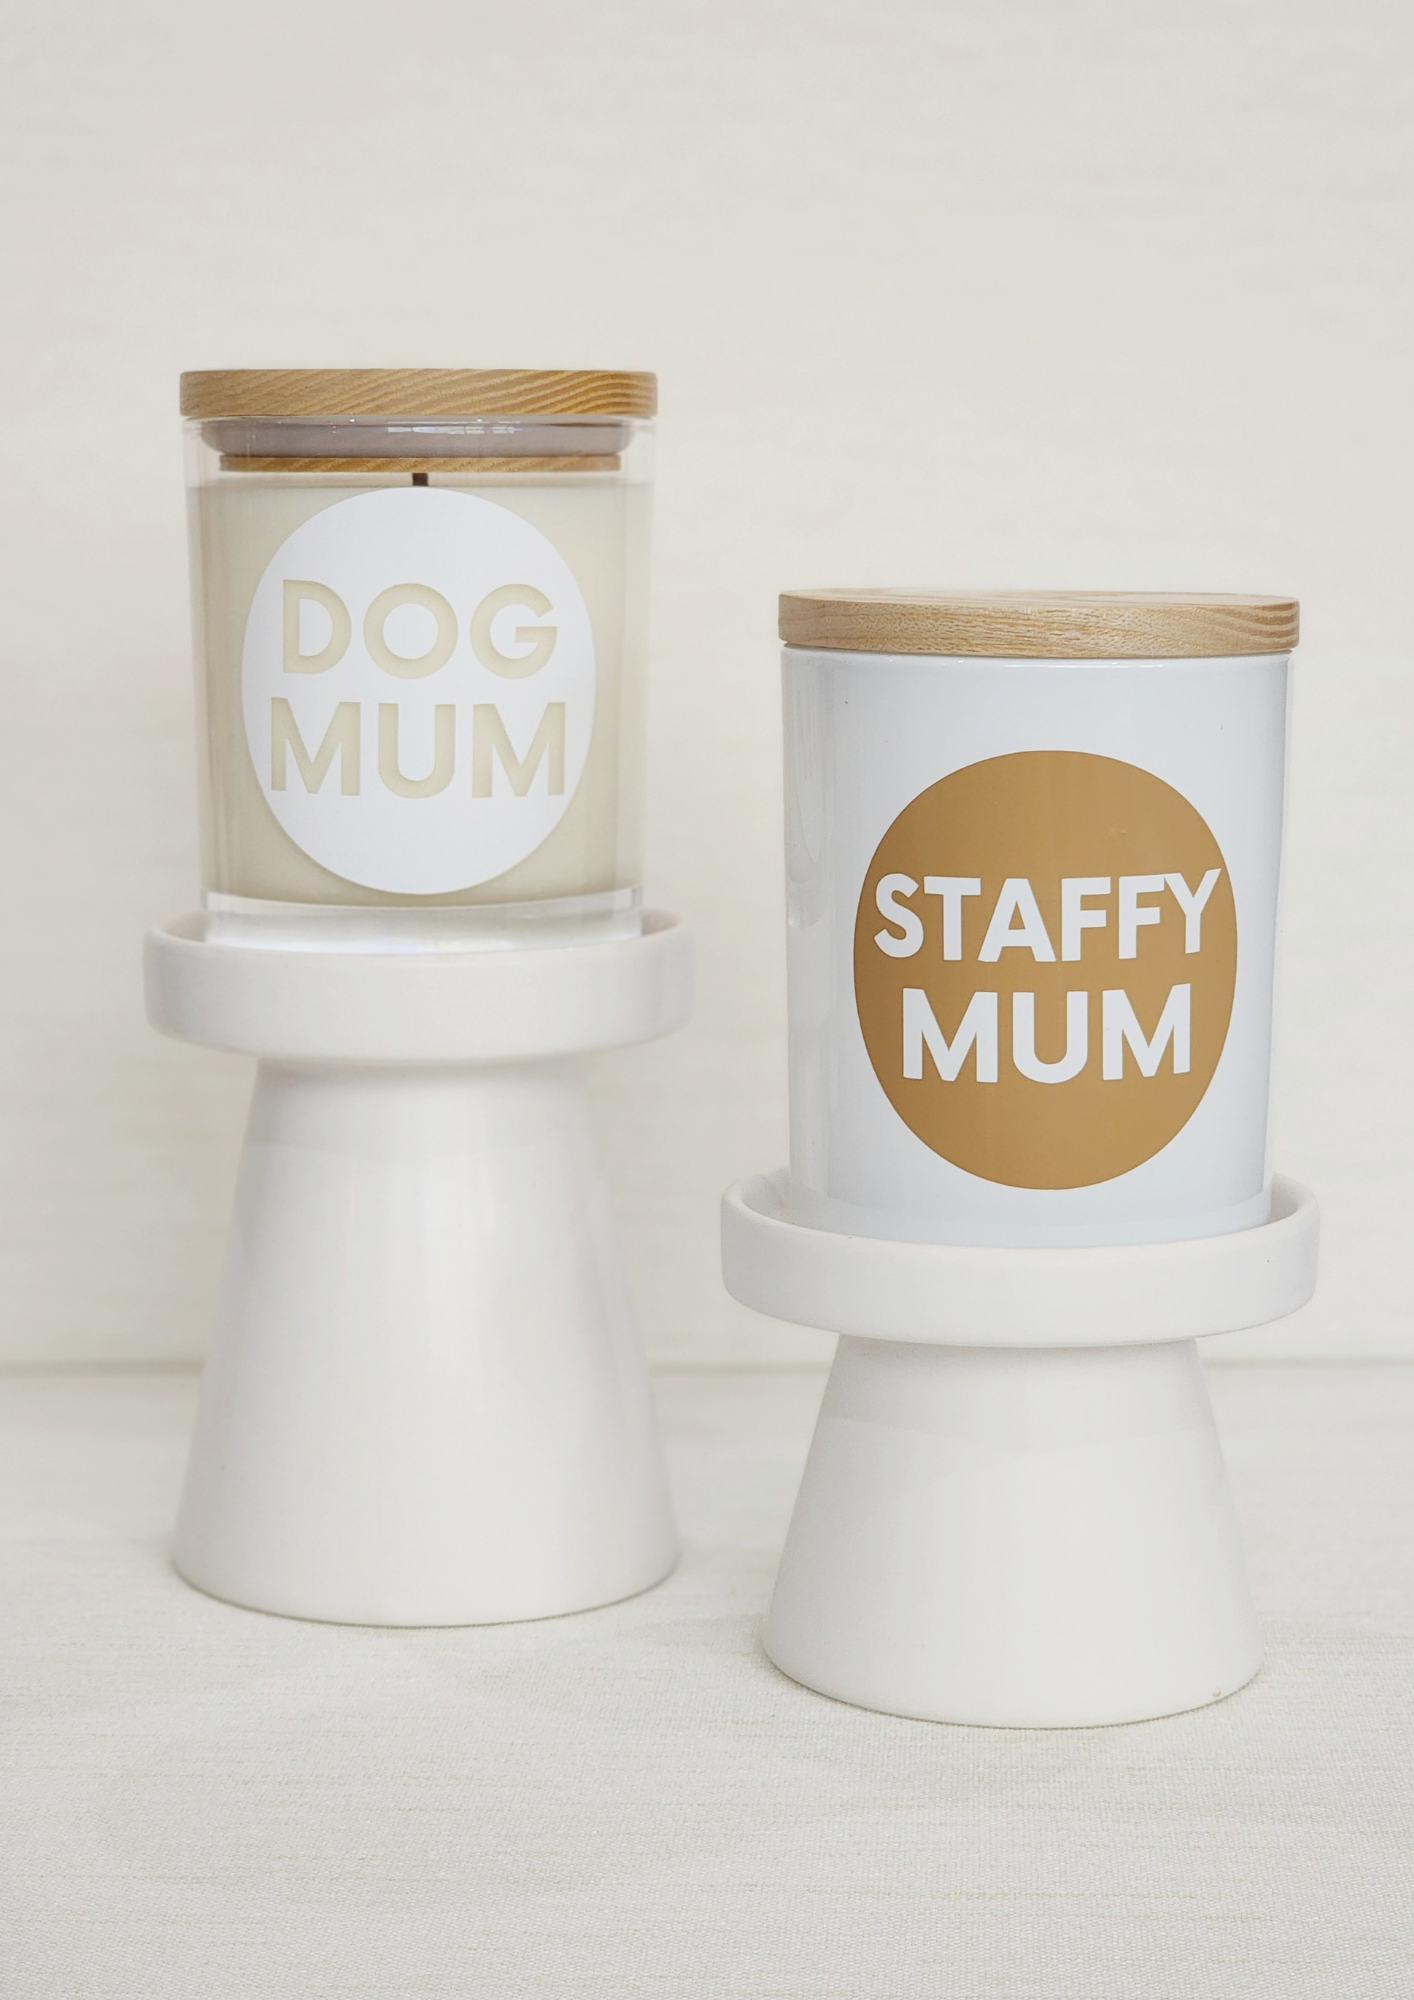 Dog Mum Decal Candle